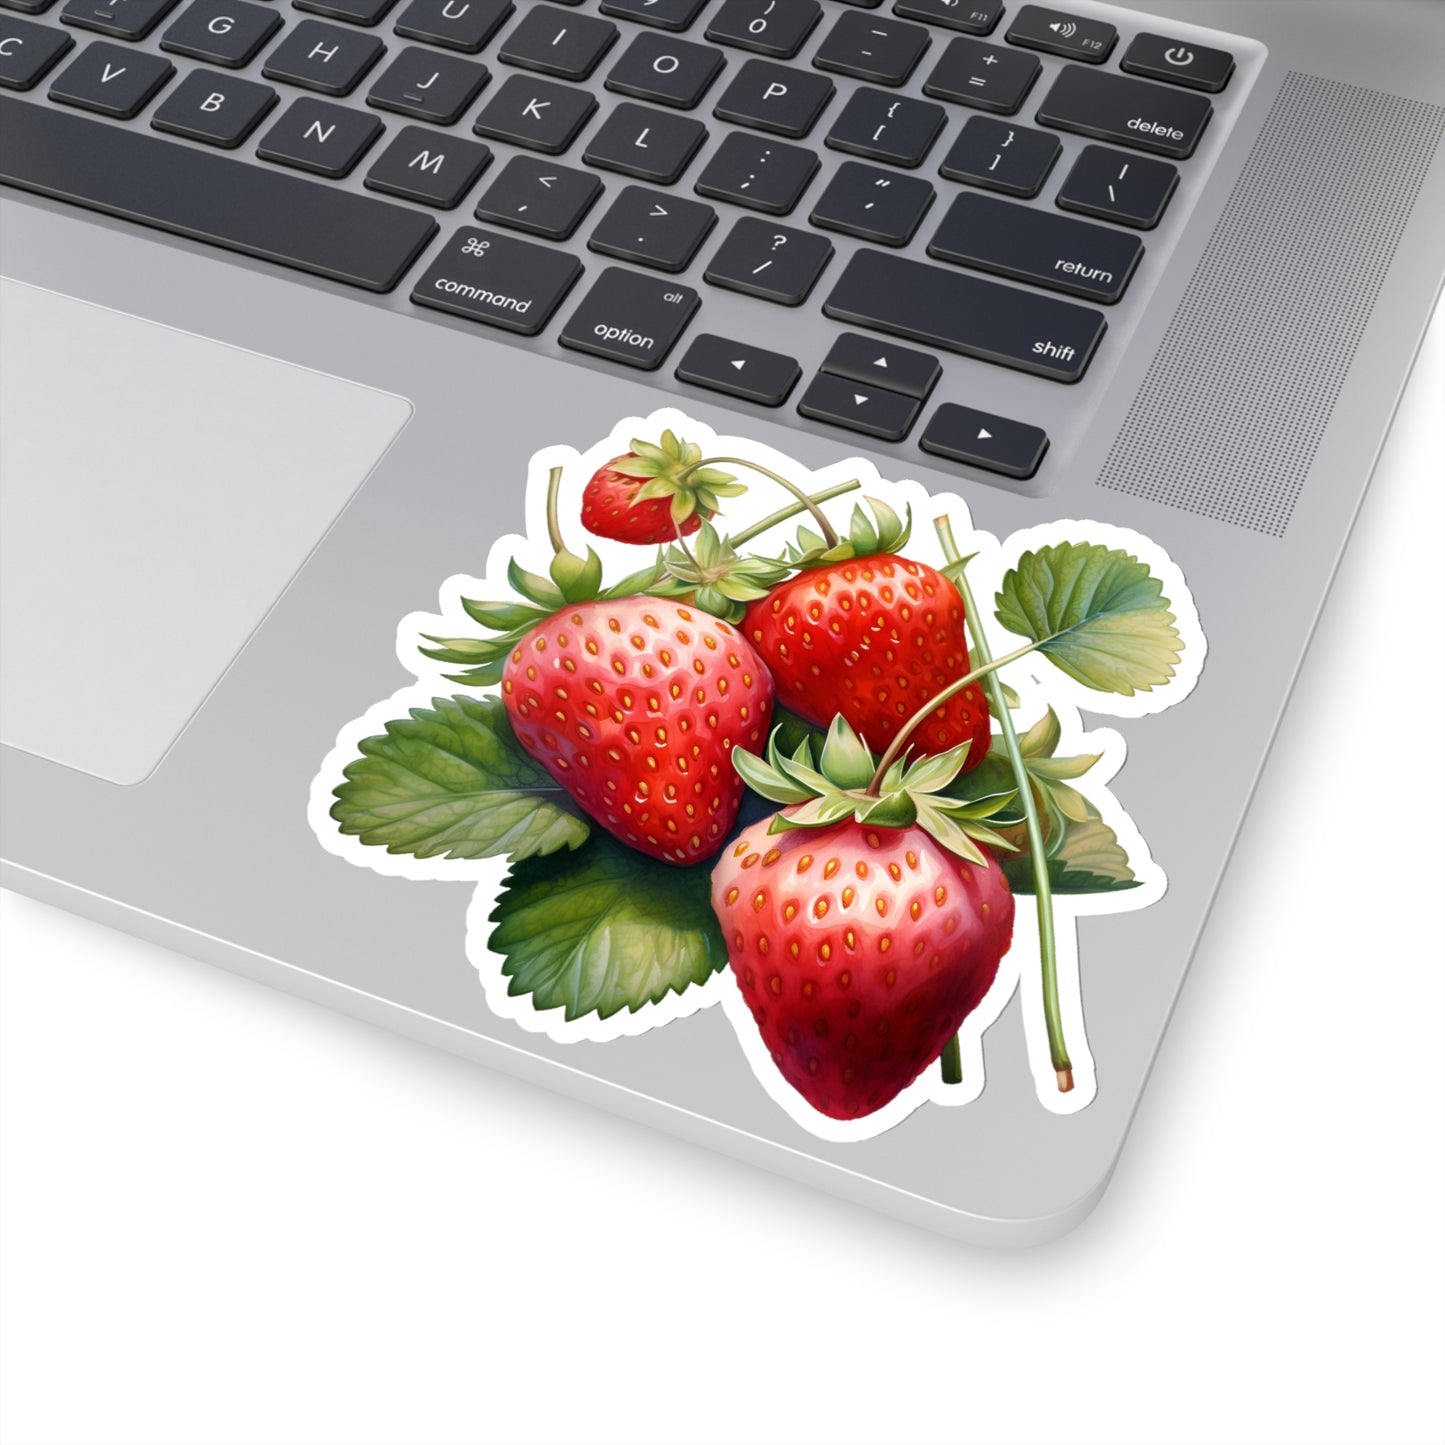 Strawberry Bunch Sticker